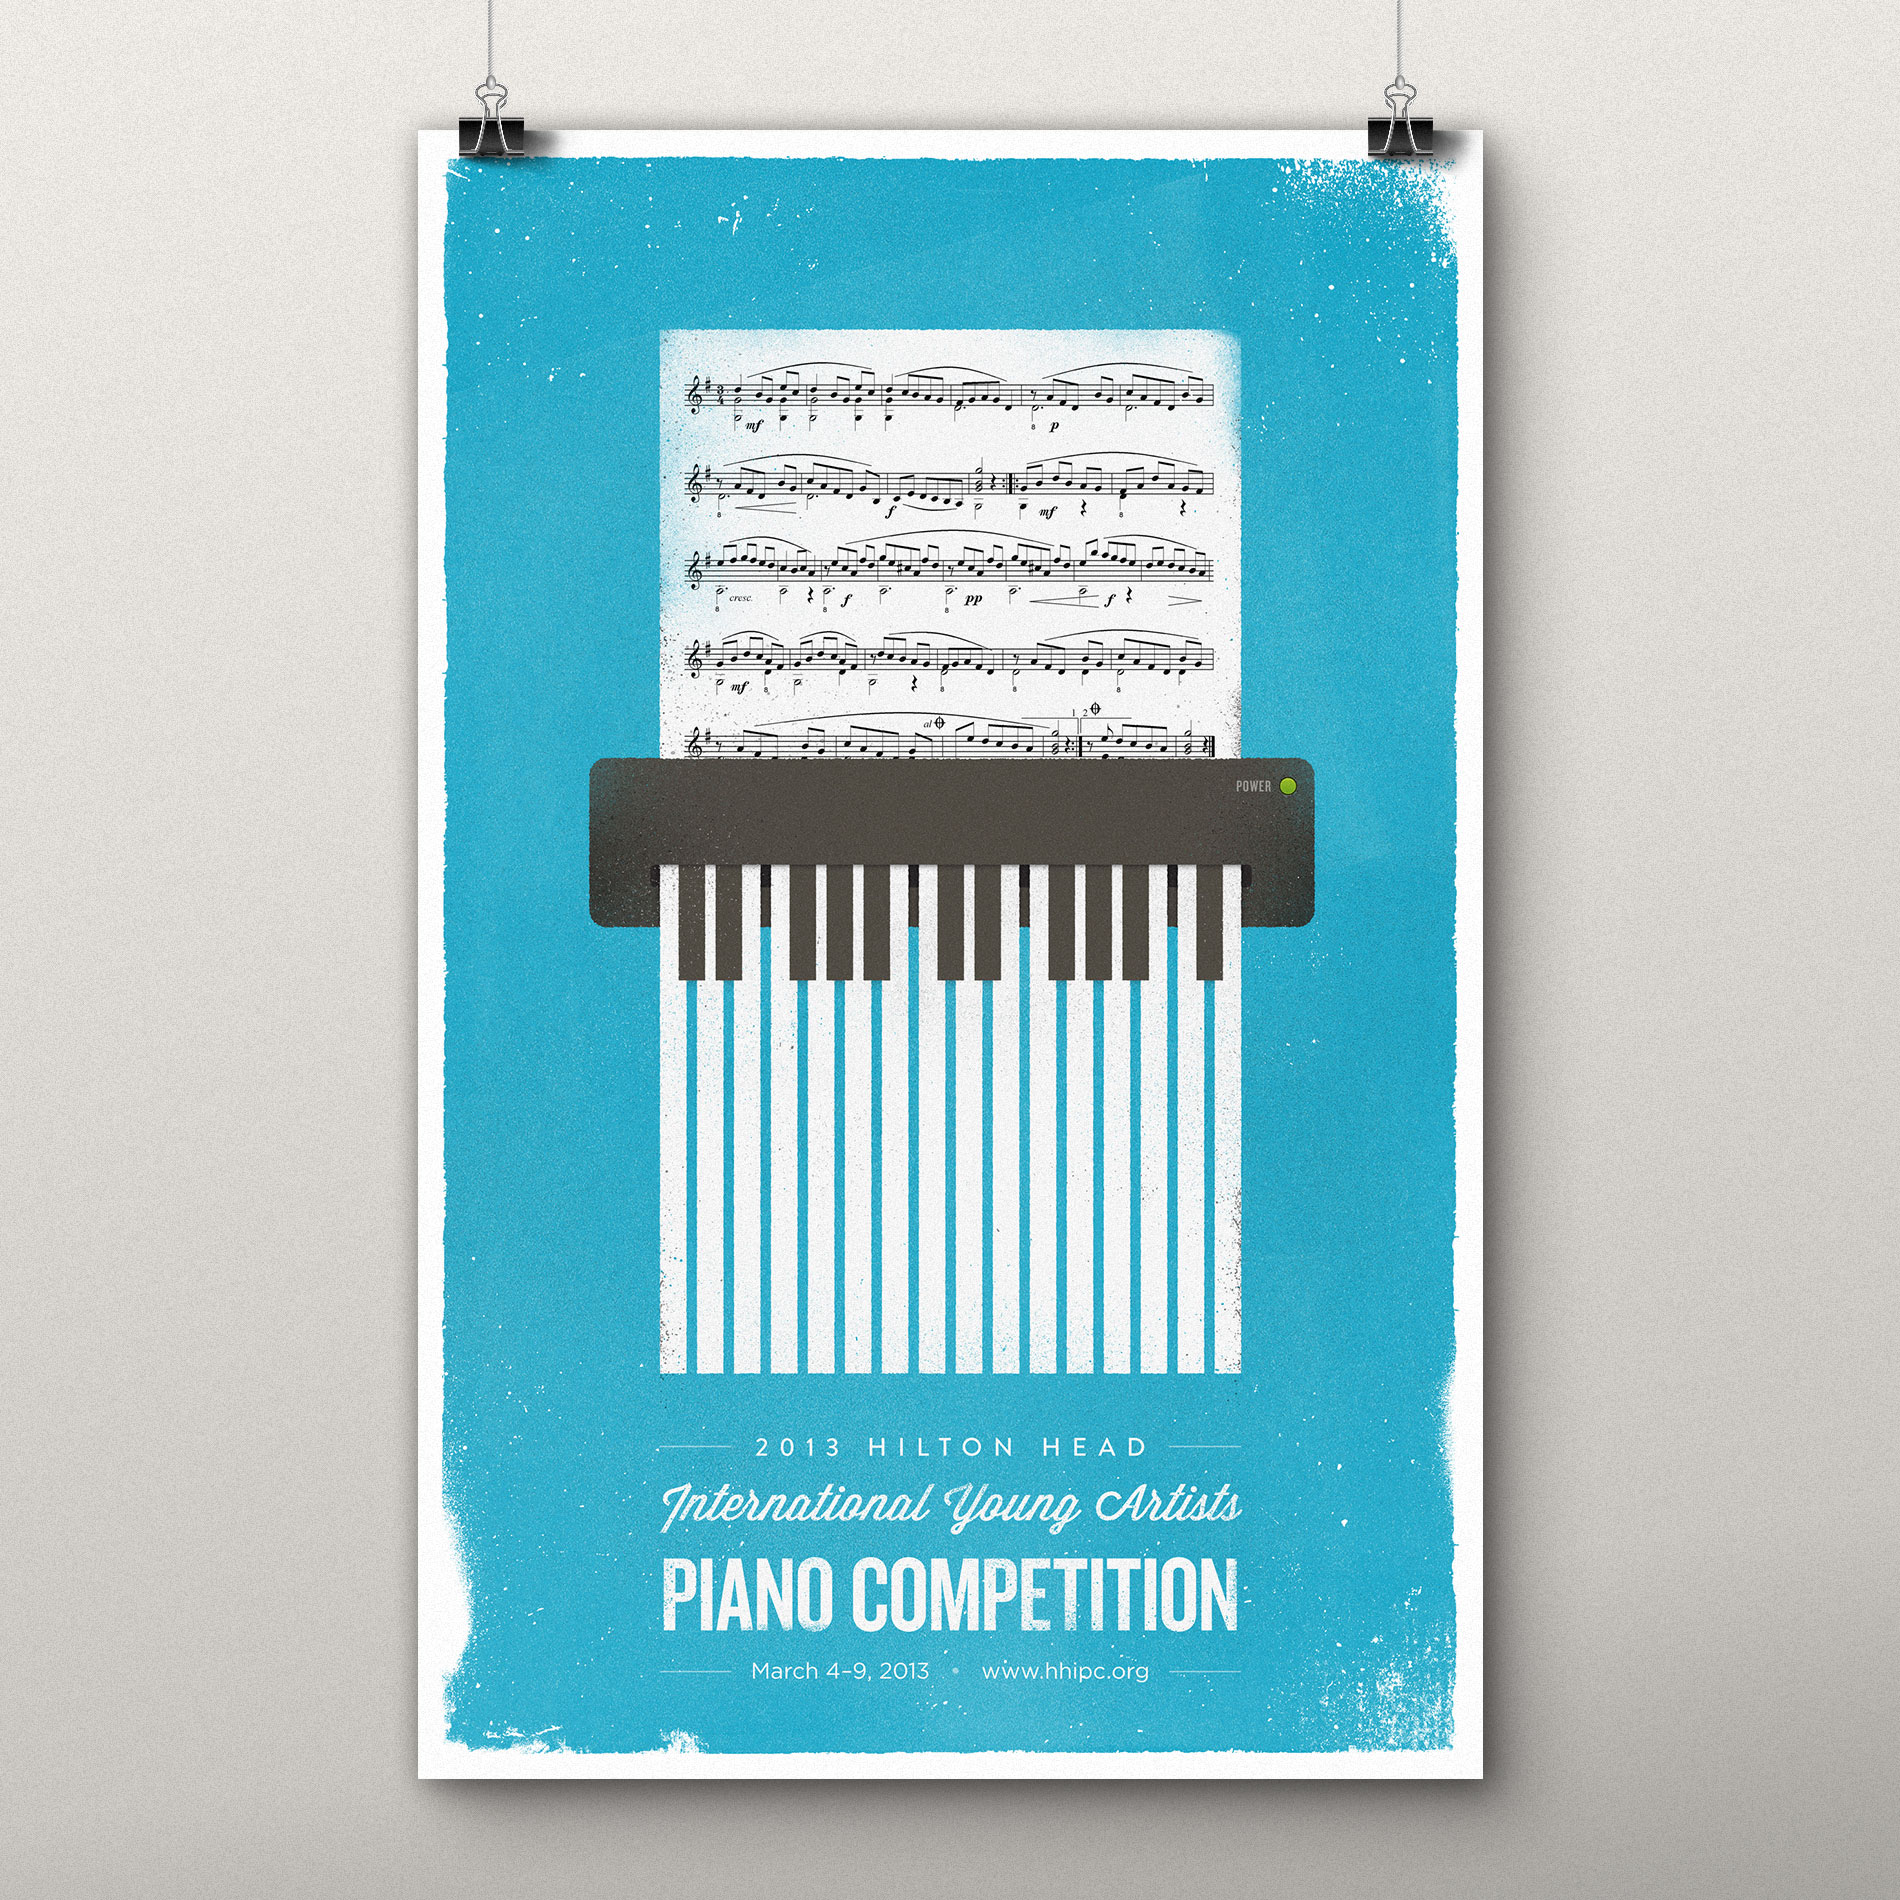 Hilton Head Piano Competition Poster